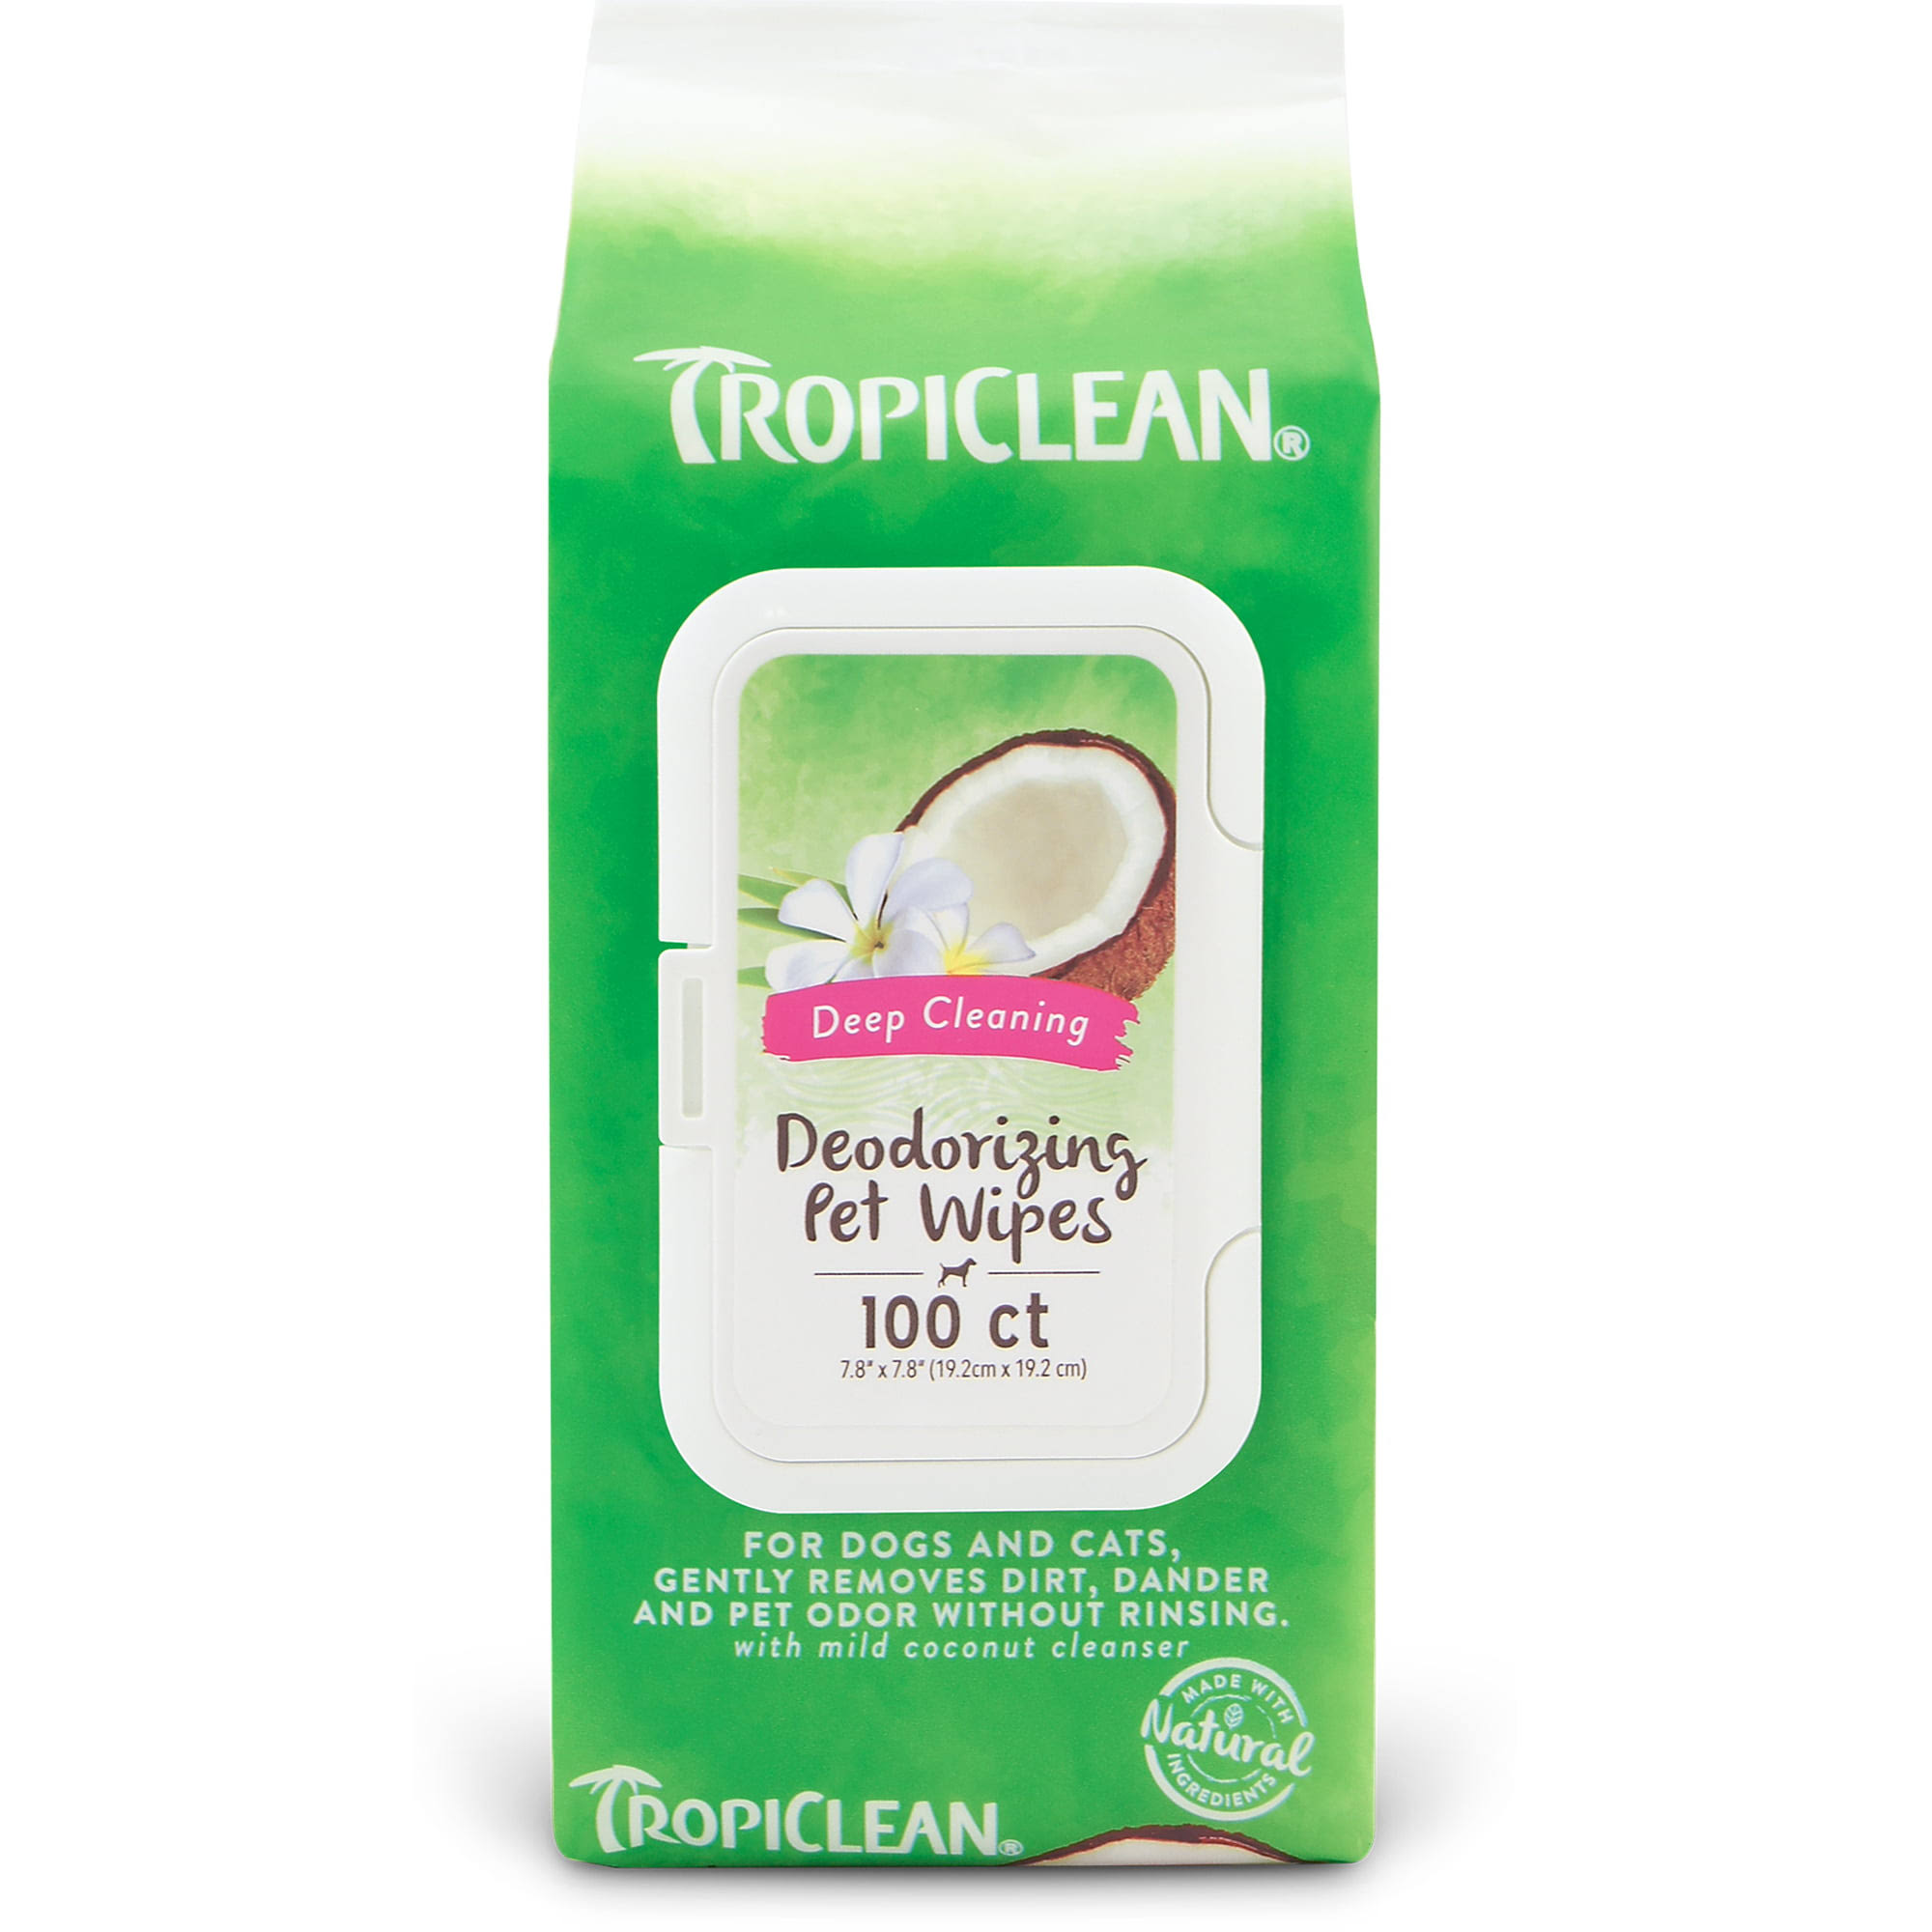 Tropiclean Deep Cleaning Deodorizing Pet Wipes - 100 ct